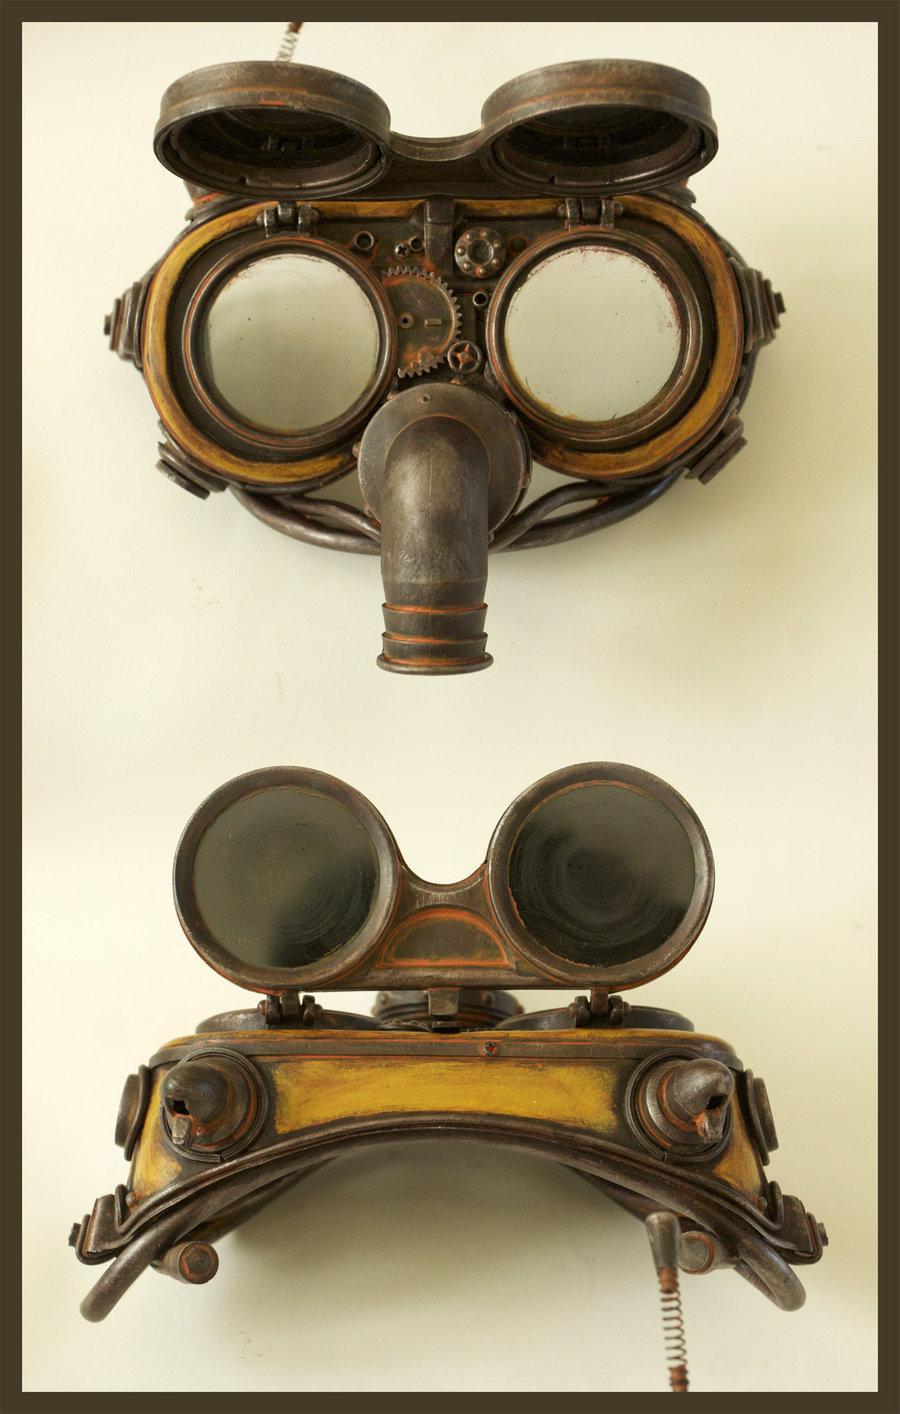 Eteheroscope steampunk goggles